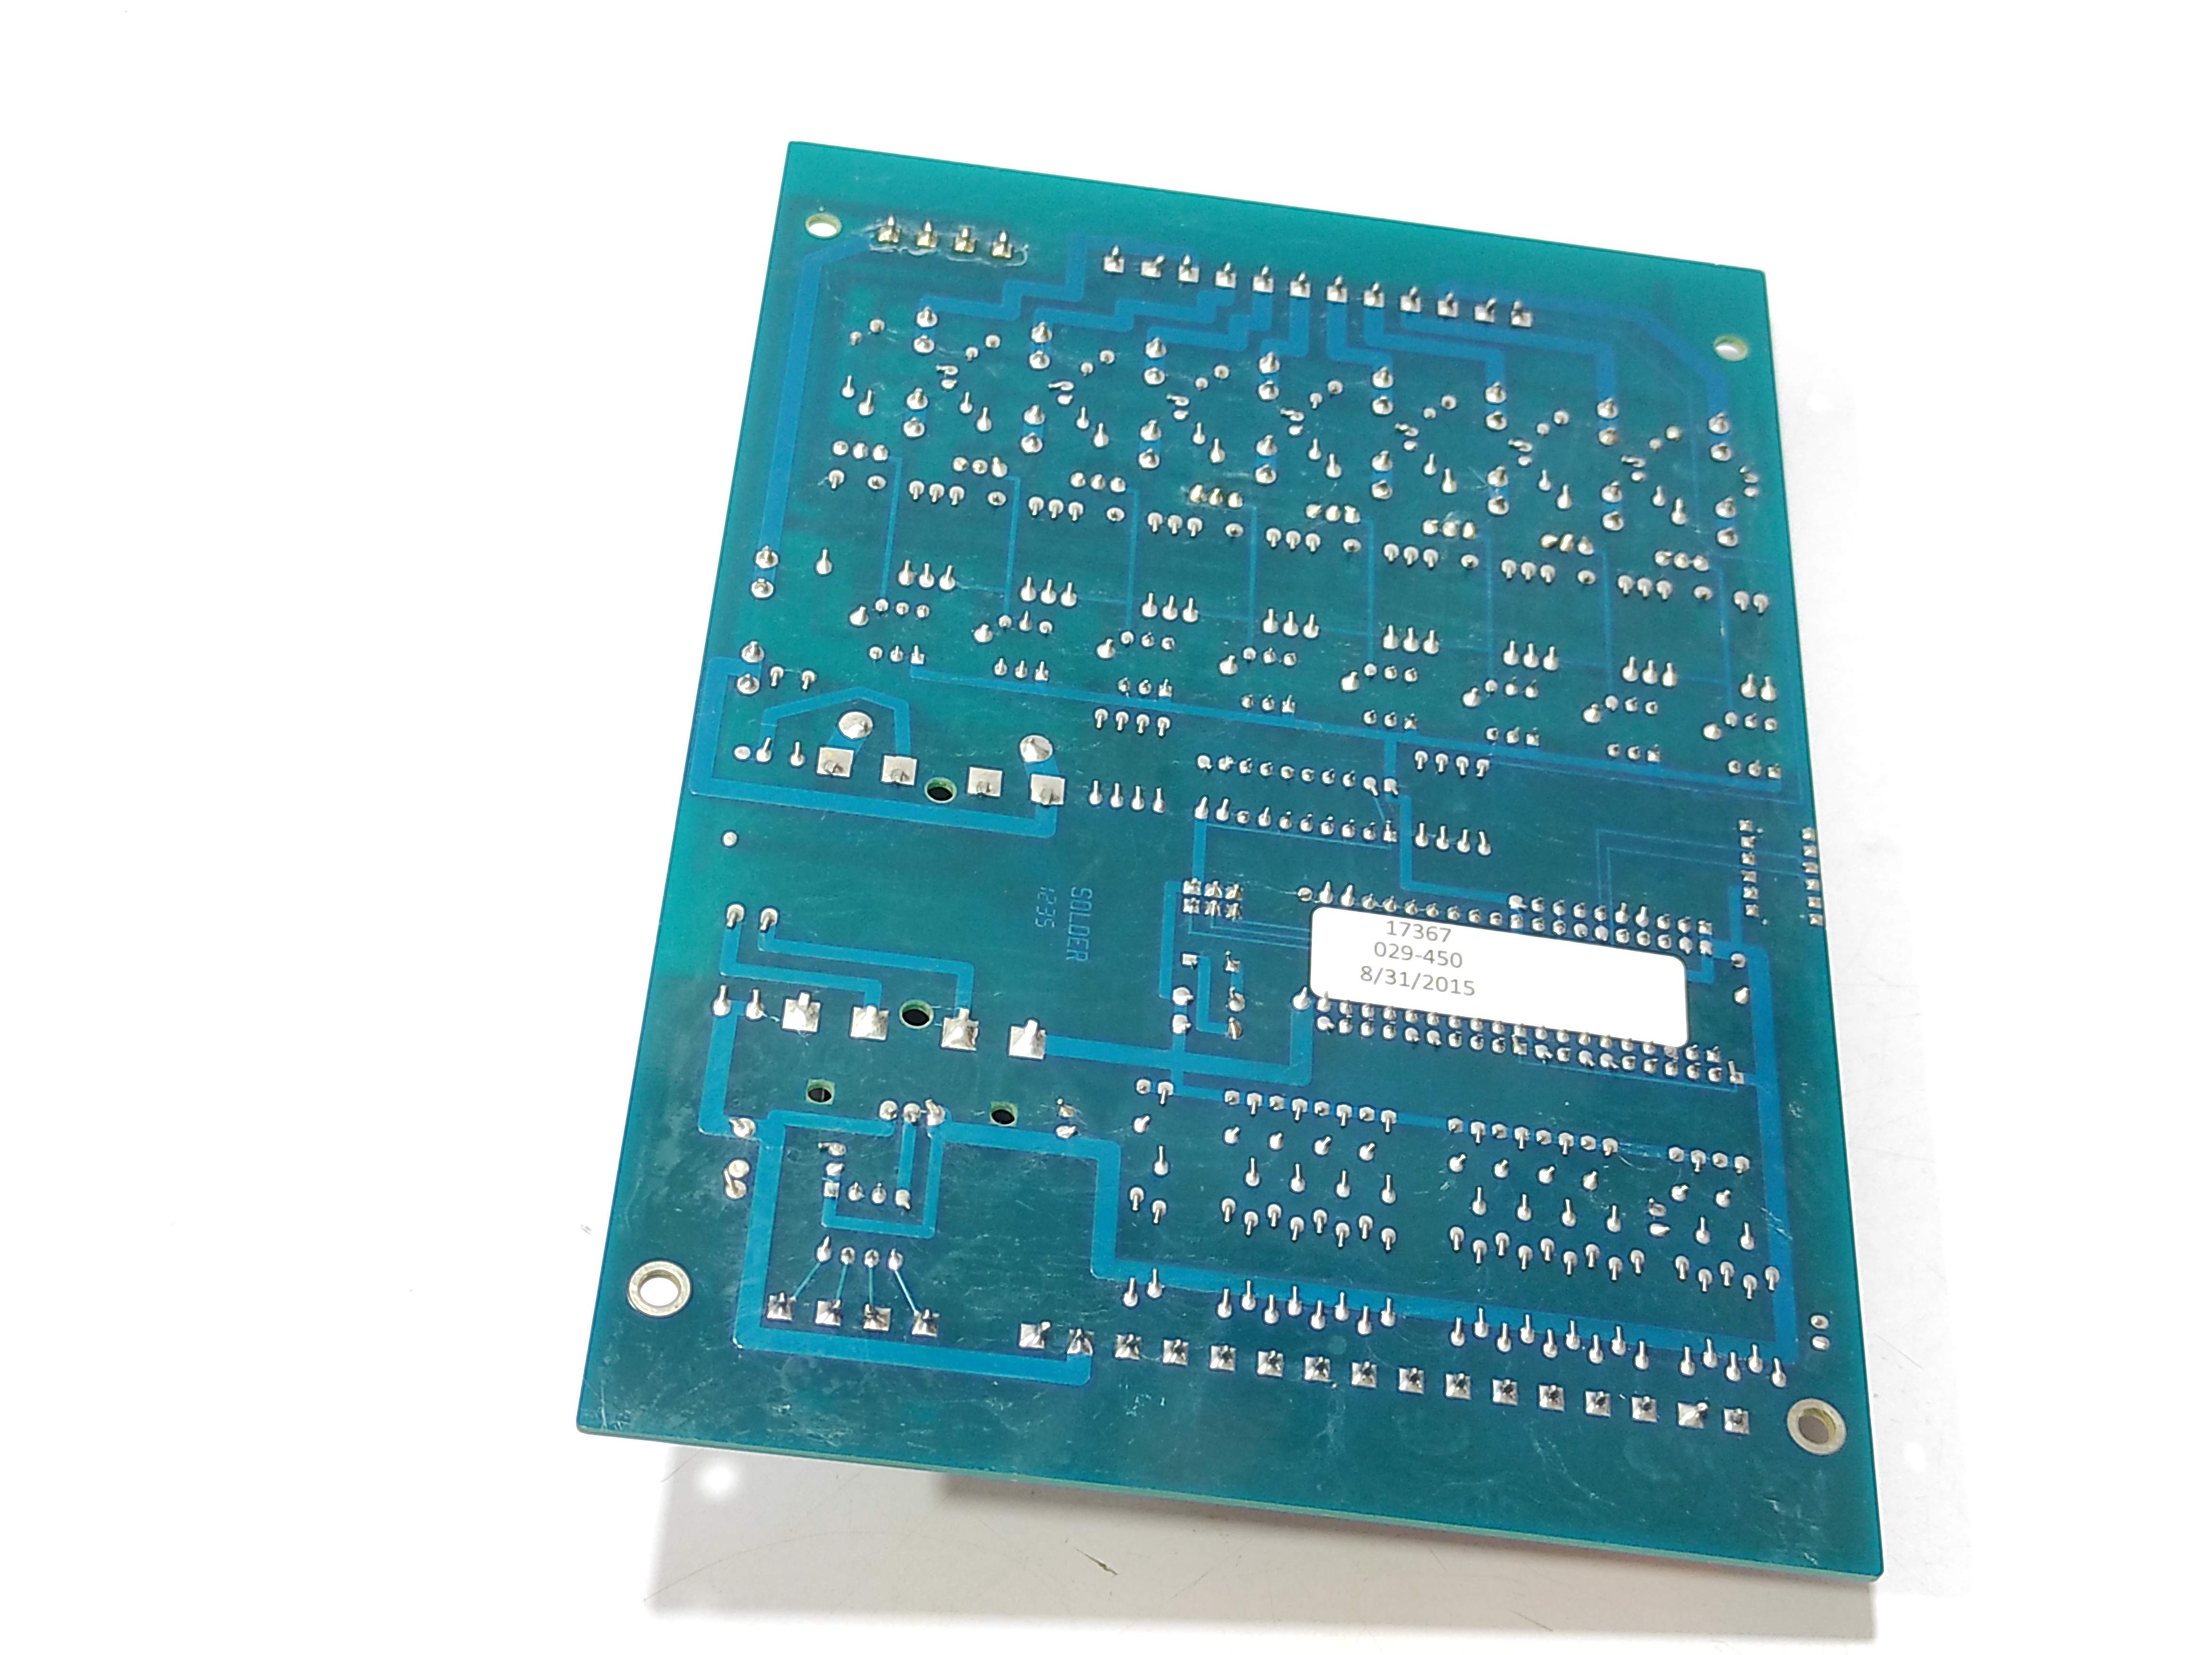 Mmats 29-450 PCB BIO.2